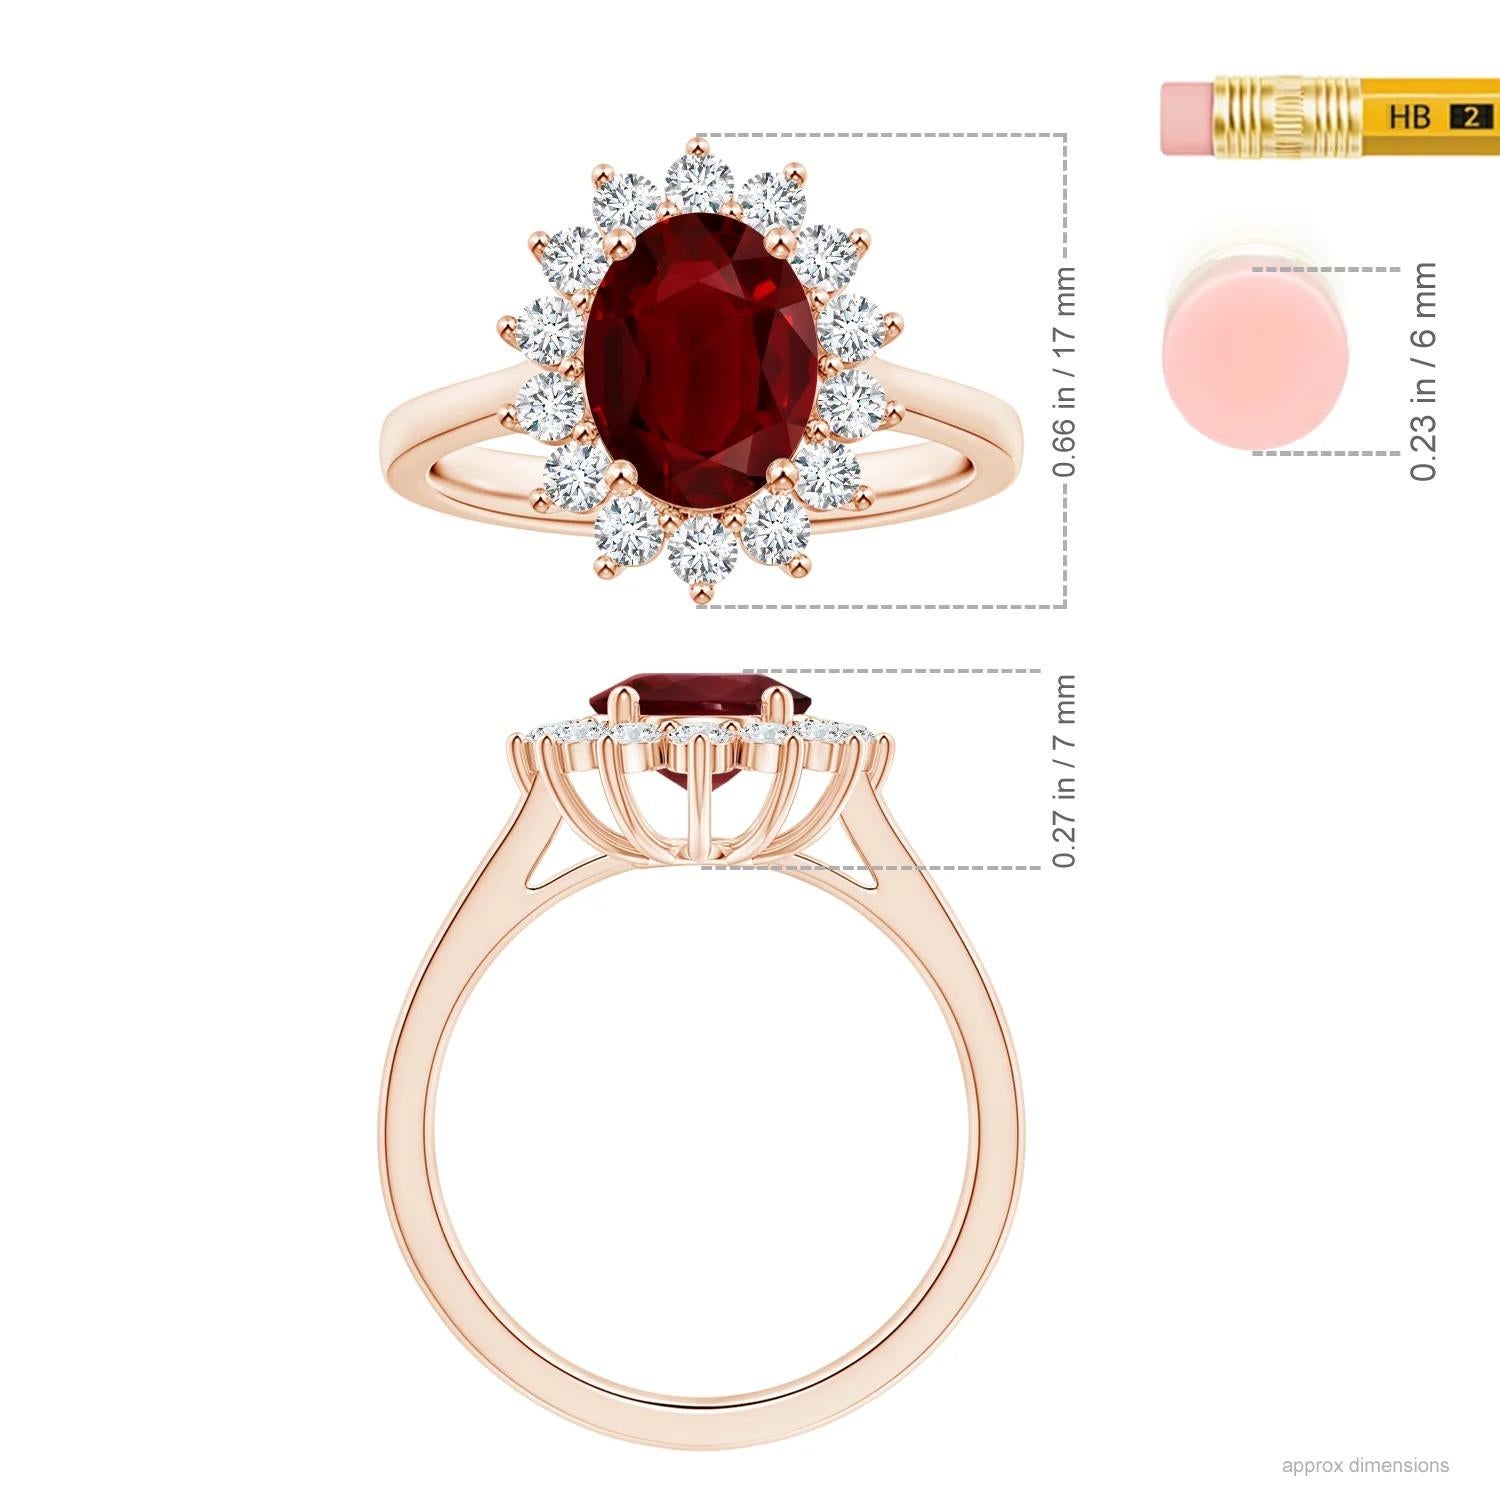 Im Angebot: Angara Gia: Prinzessin Diana inspirierter Halo-Ring aus Roségold mit zertifiziertem Rubin () 5